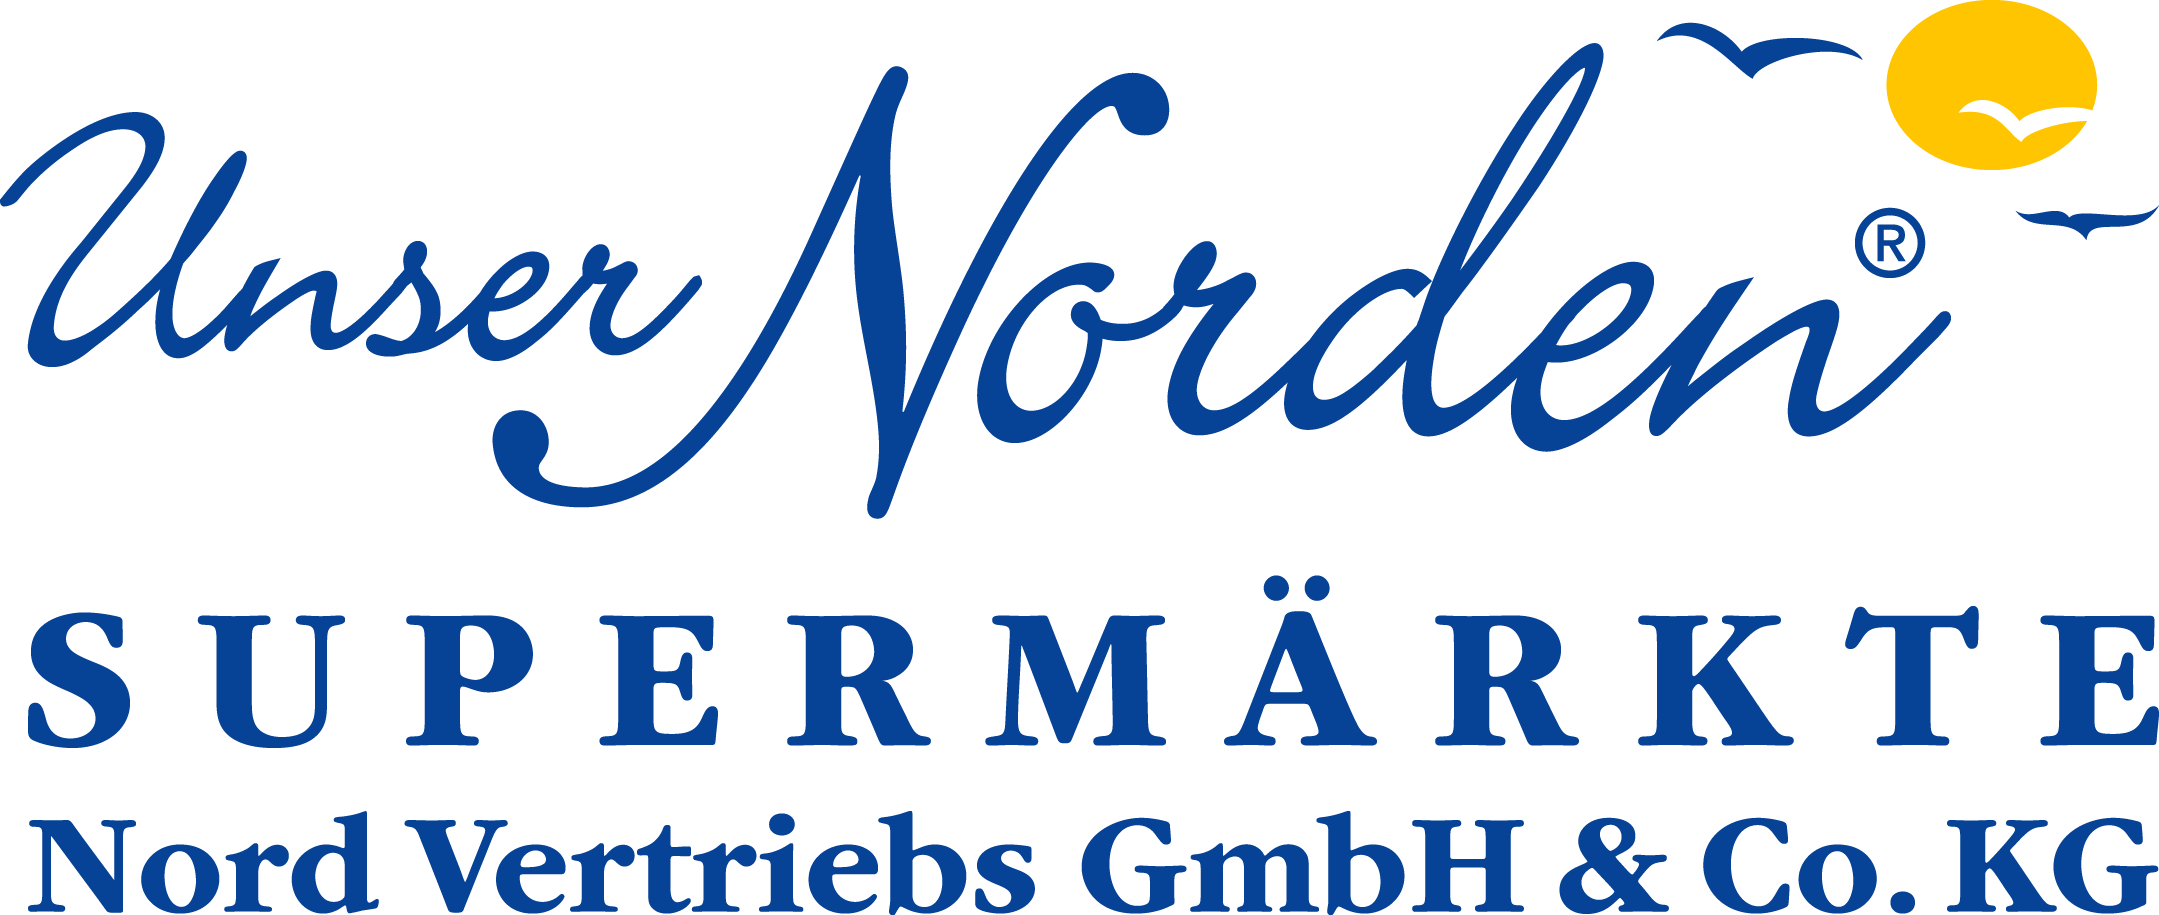 Supermärkte Nord Vertriebs GmbH & Co. KG